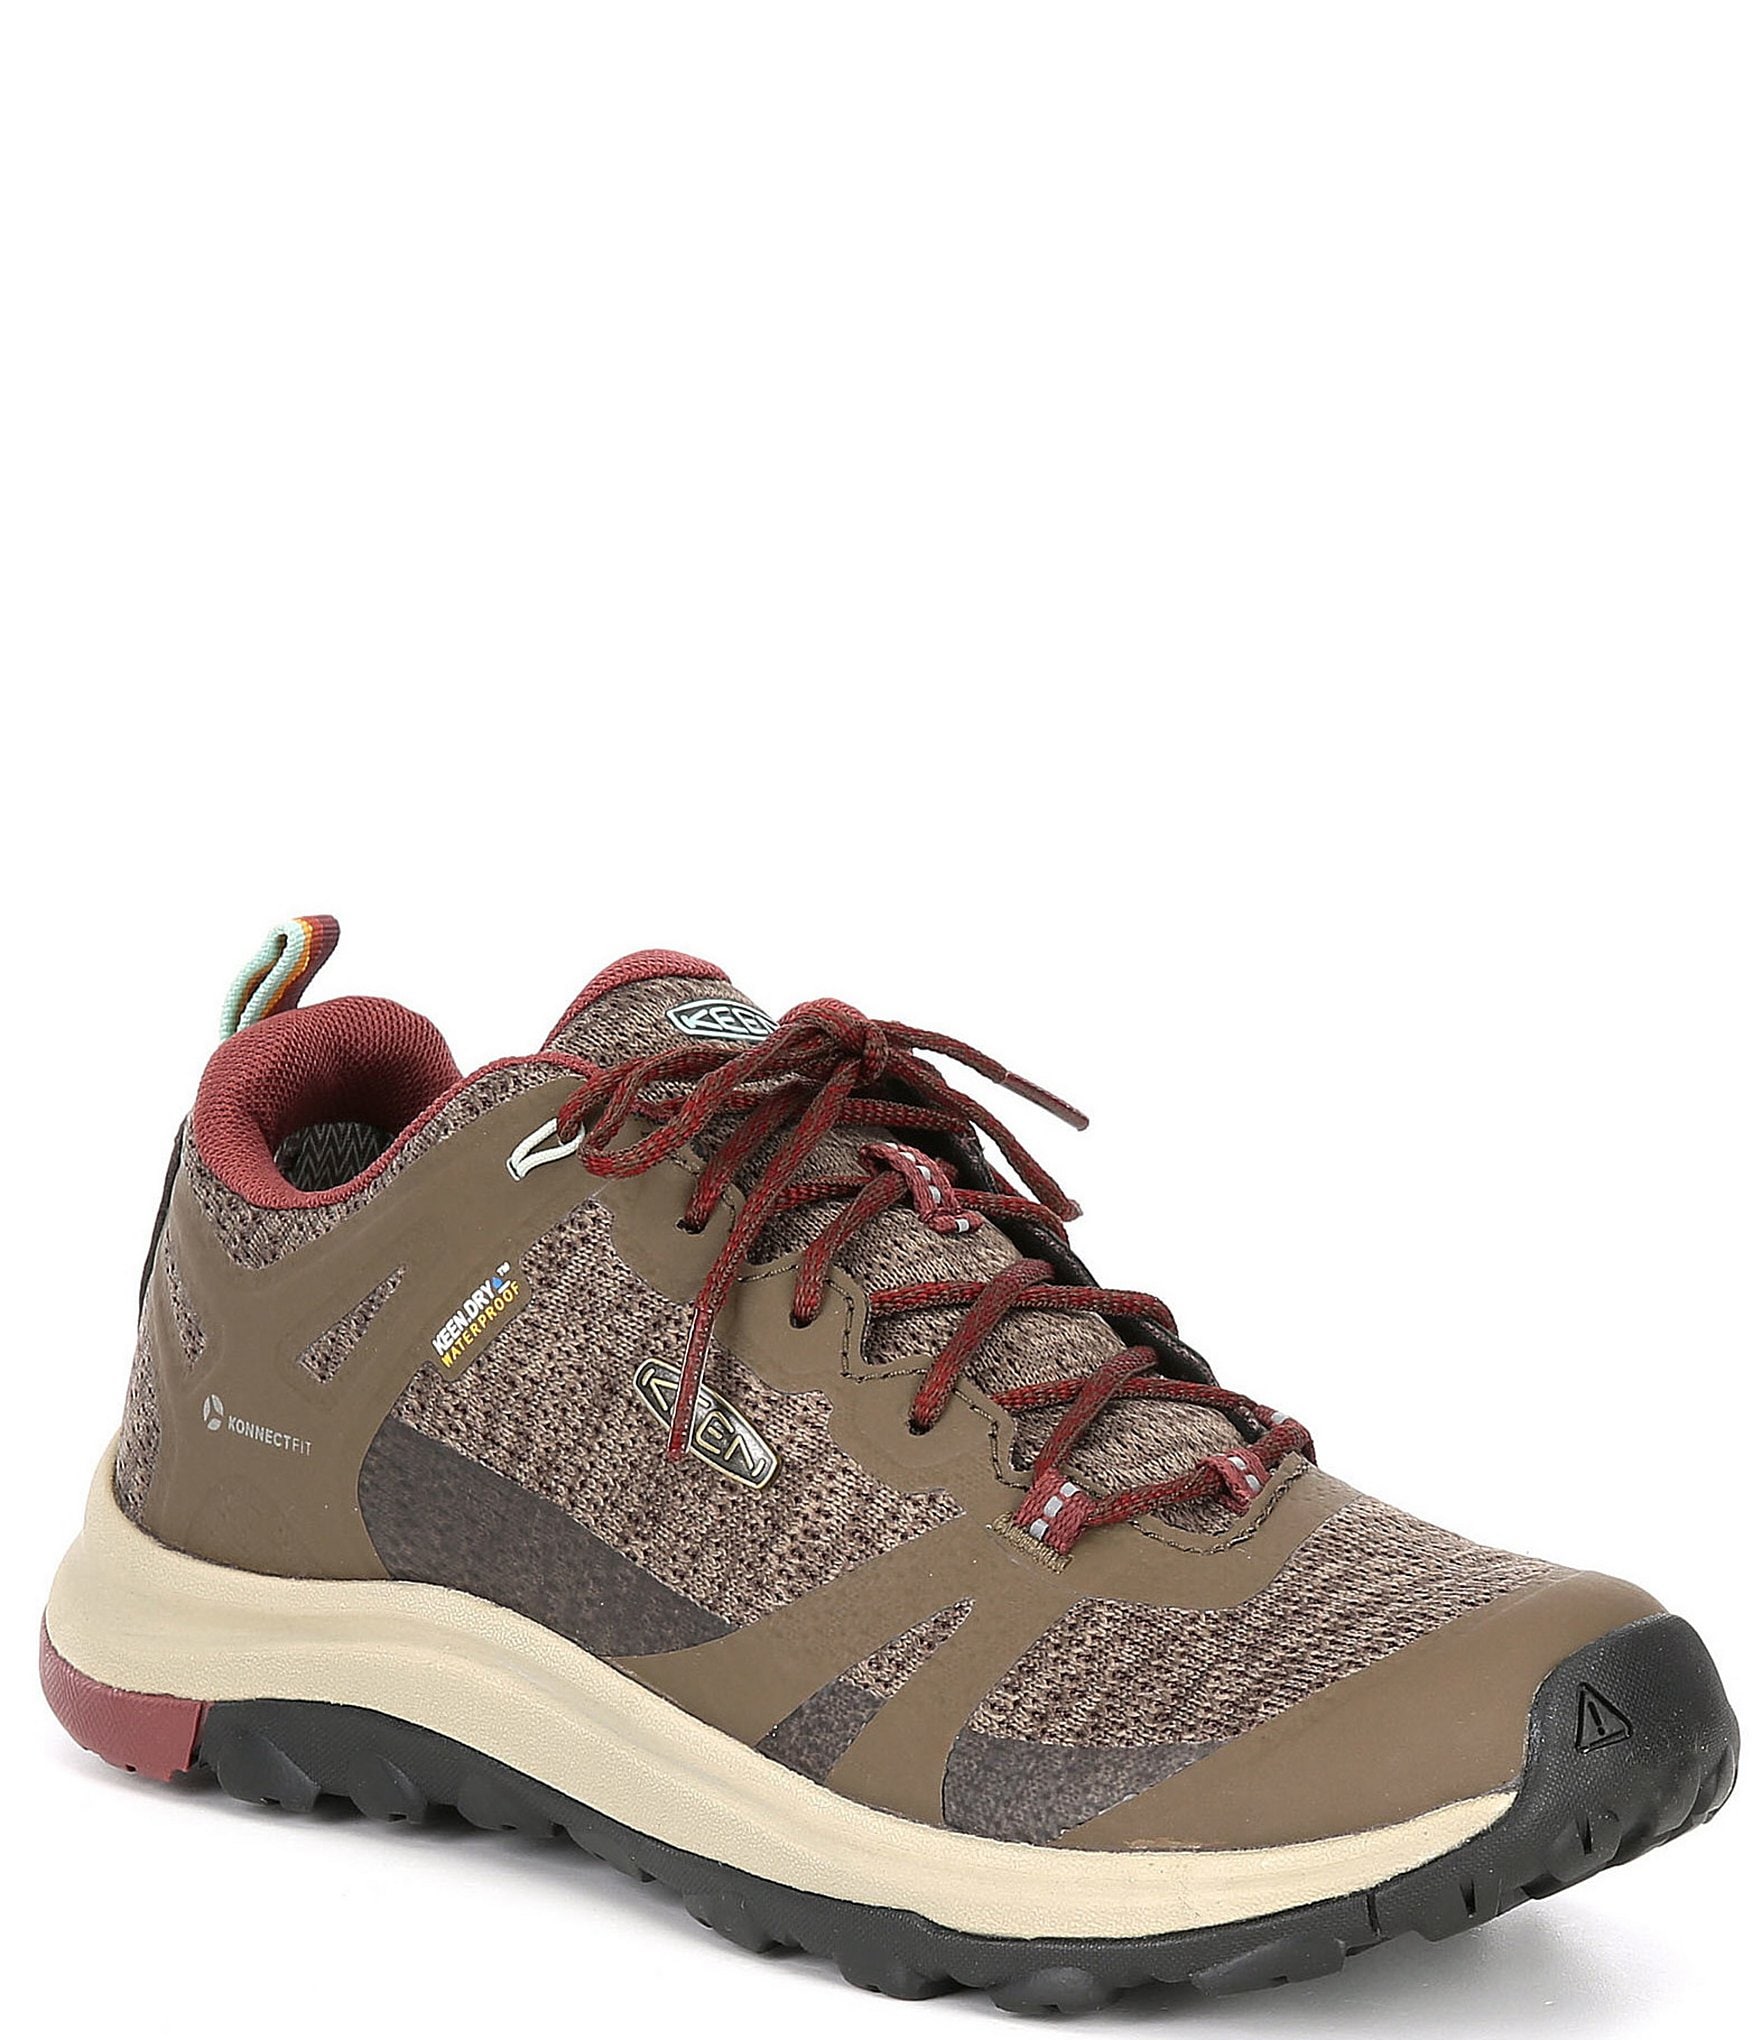 brasher women's country hiker shoe